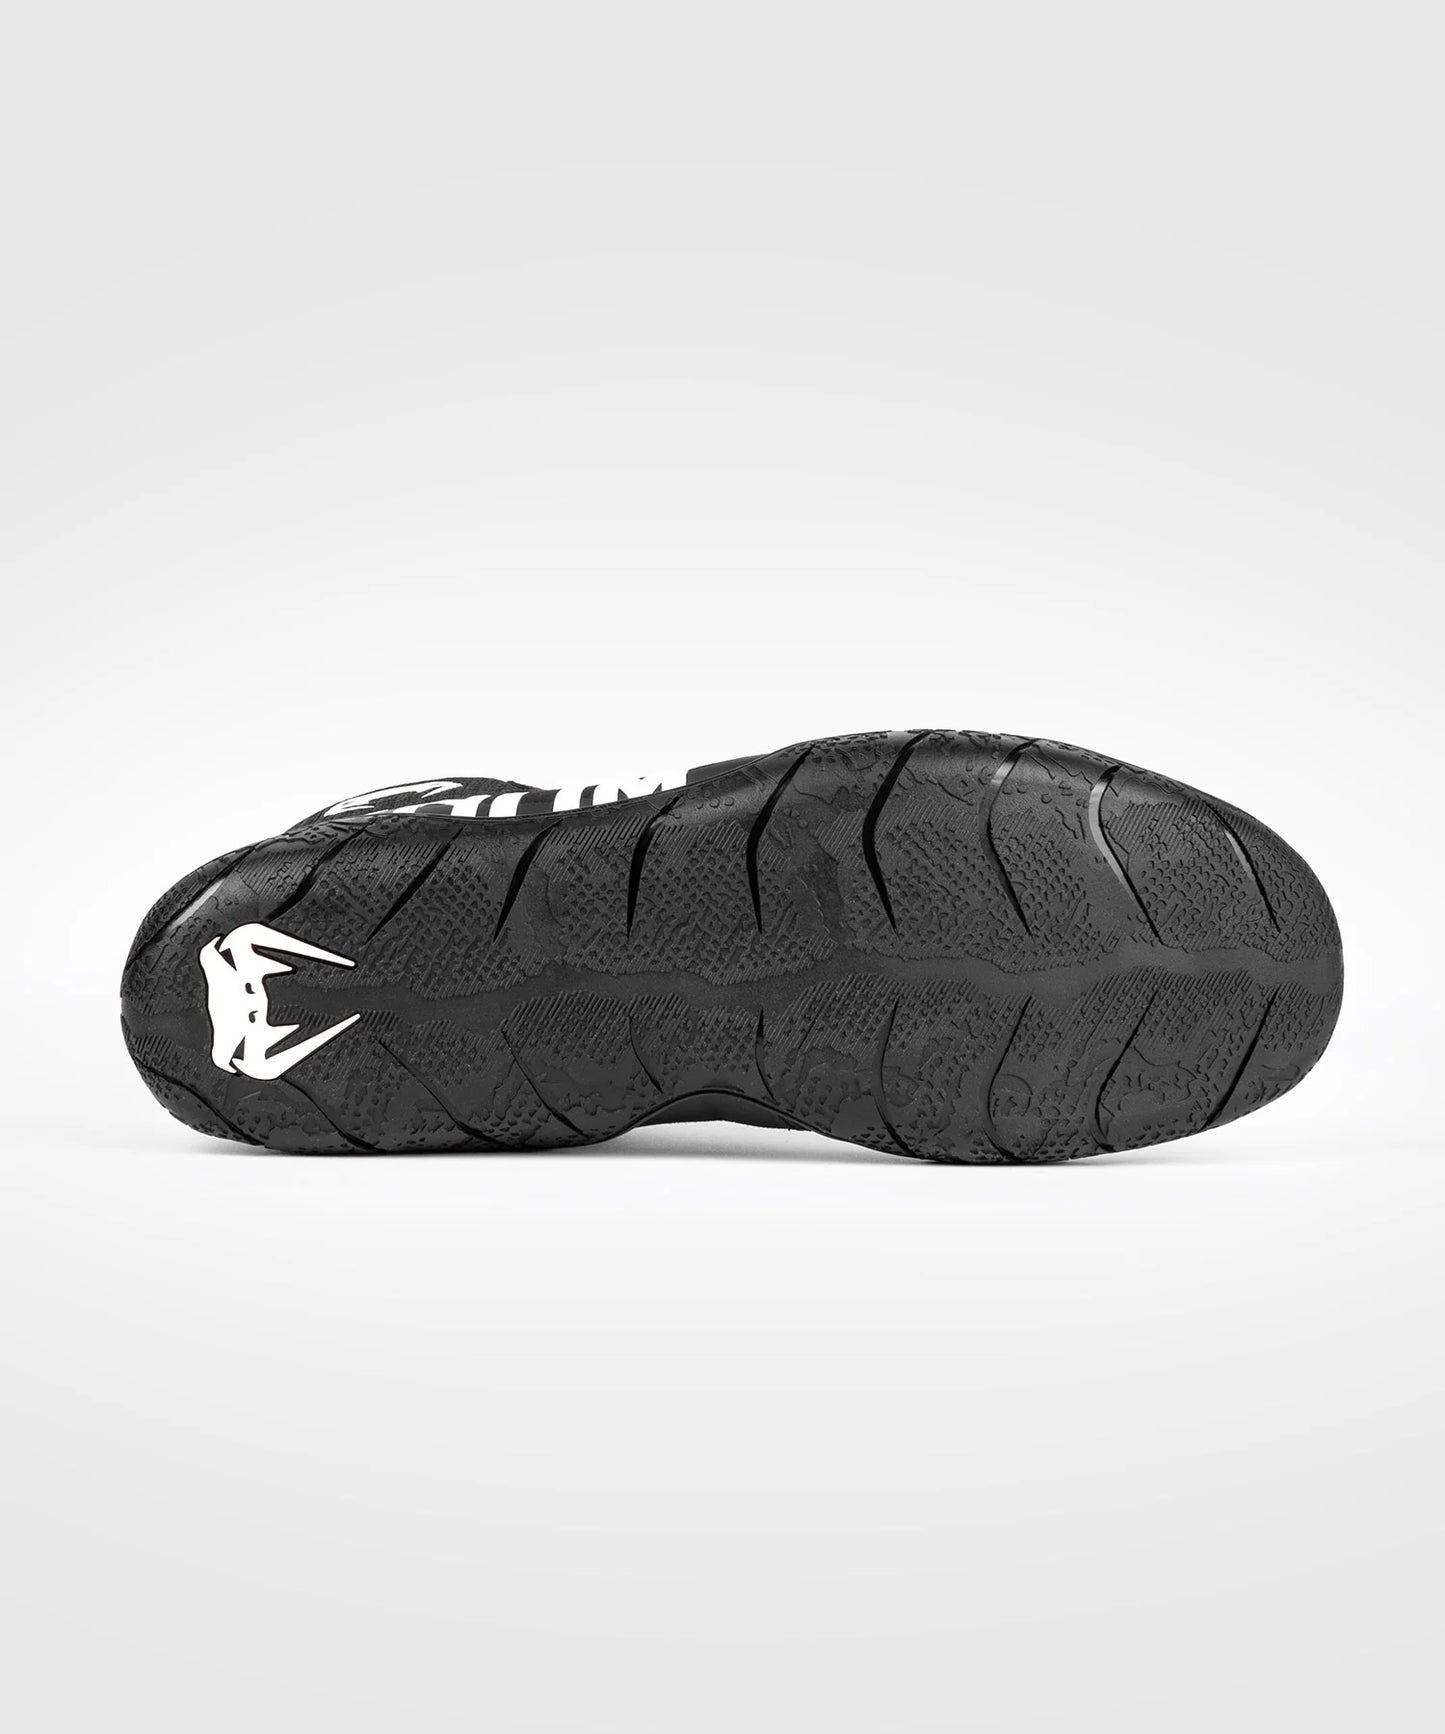 Elite Fitness Shoes - Black White